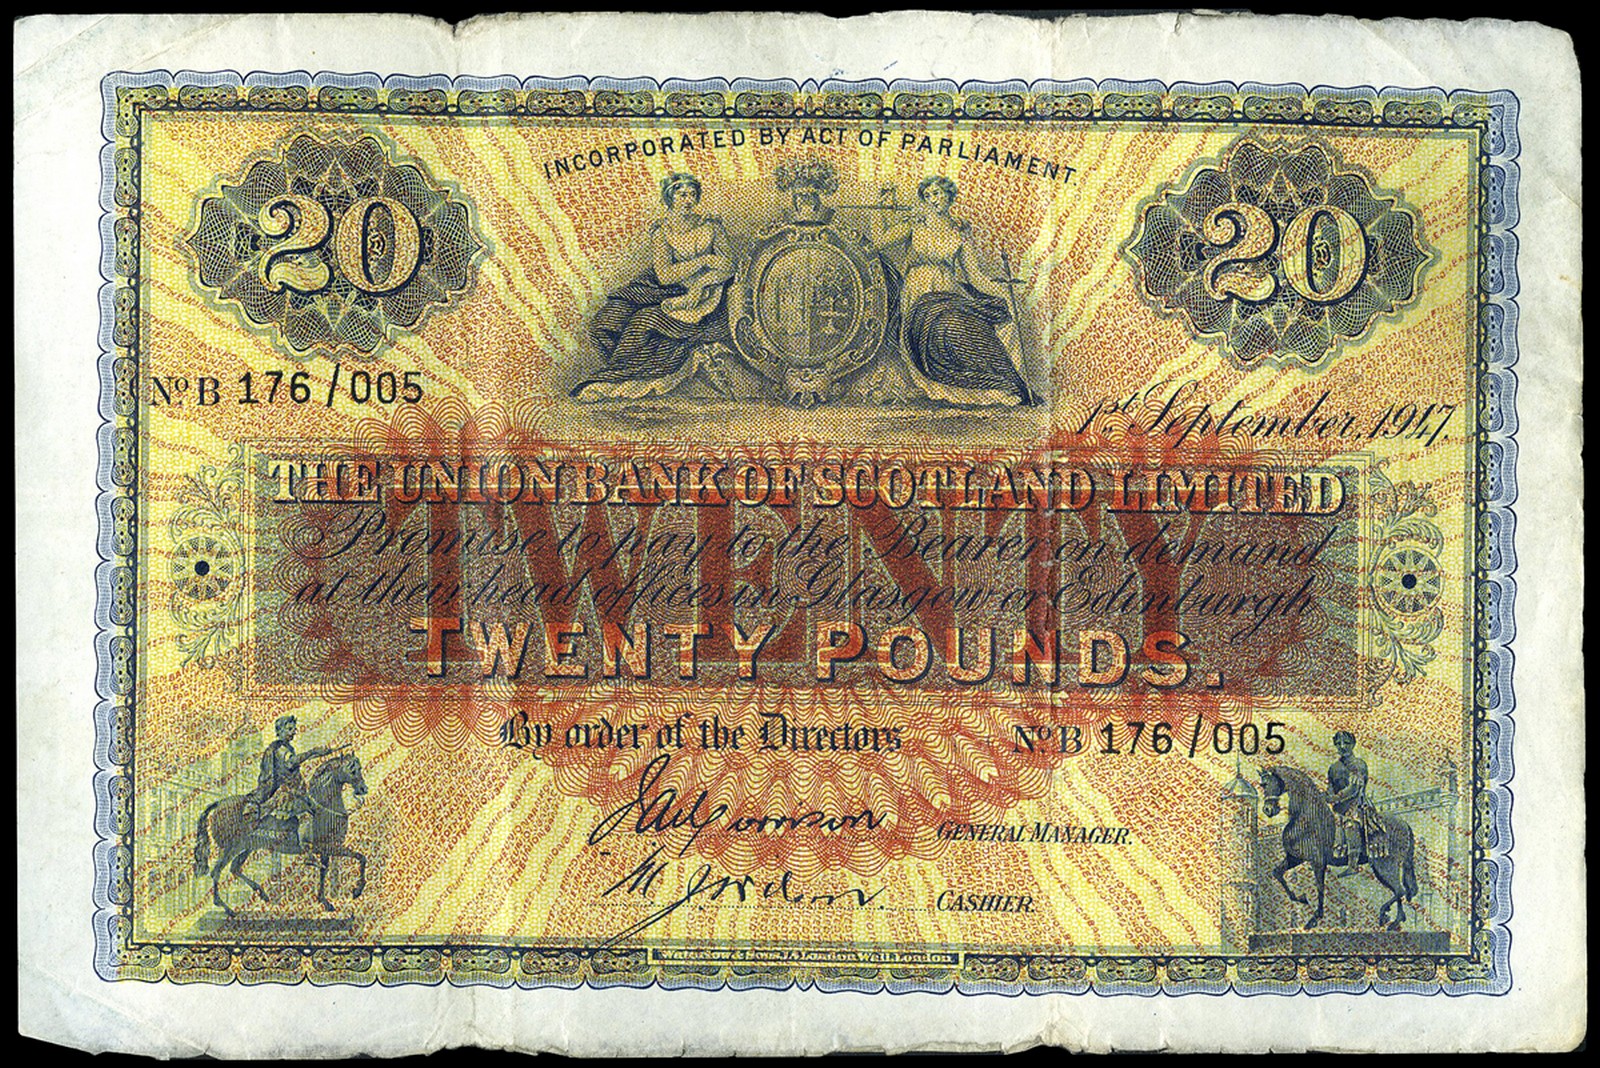 BRITISH BANKNOTES, The Union Bank of Scotland Ltd, Twenty Pounds, 1 September 1947, B 176/005,